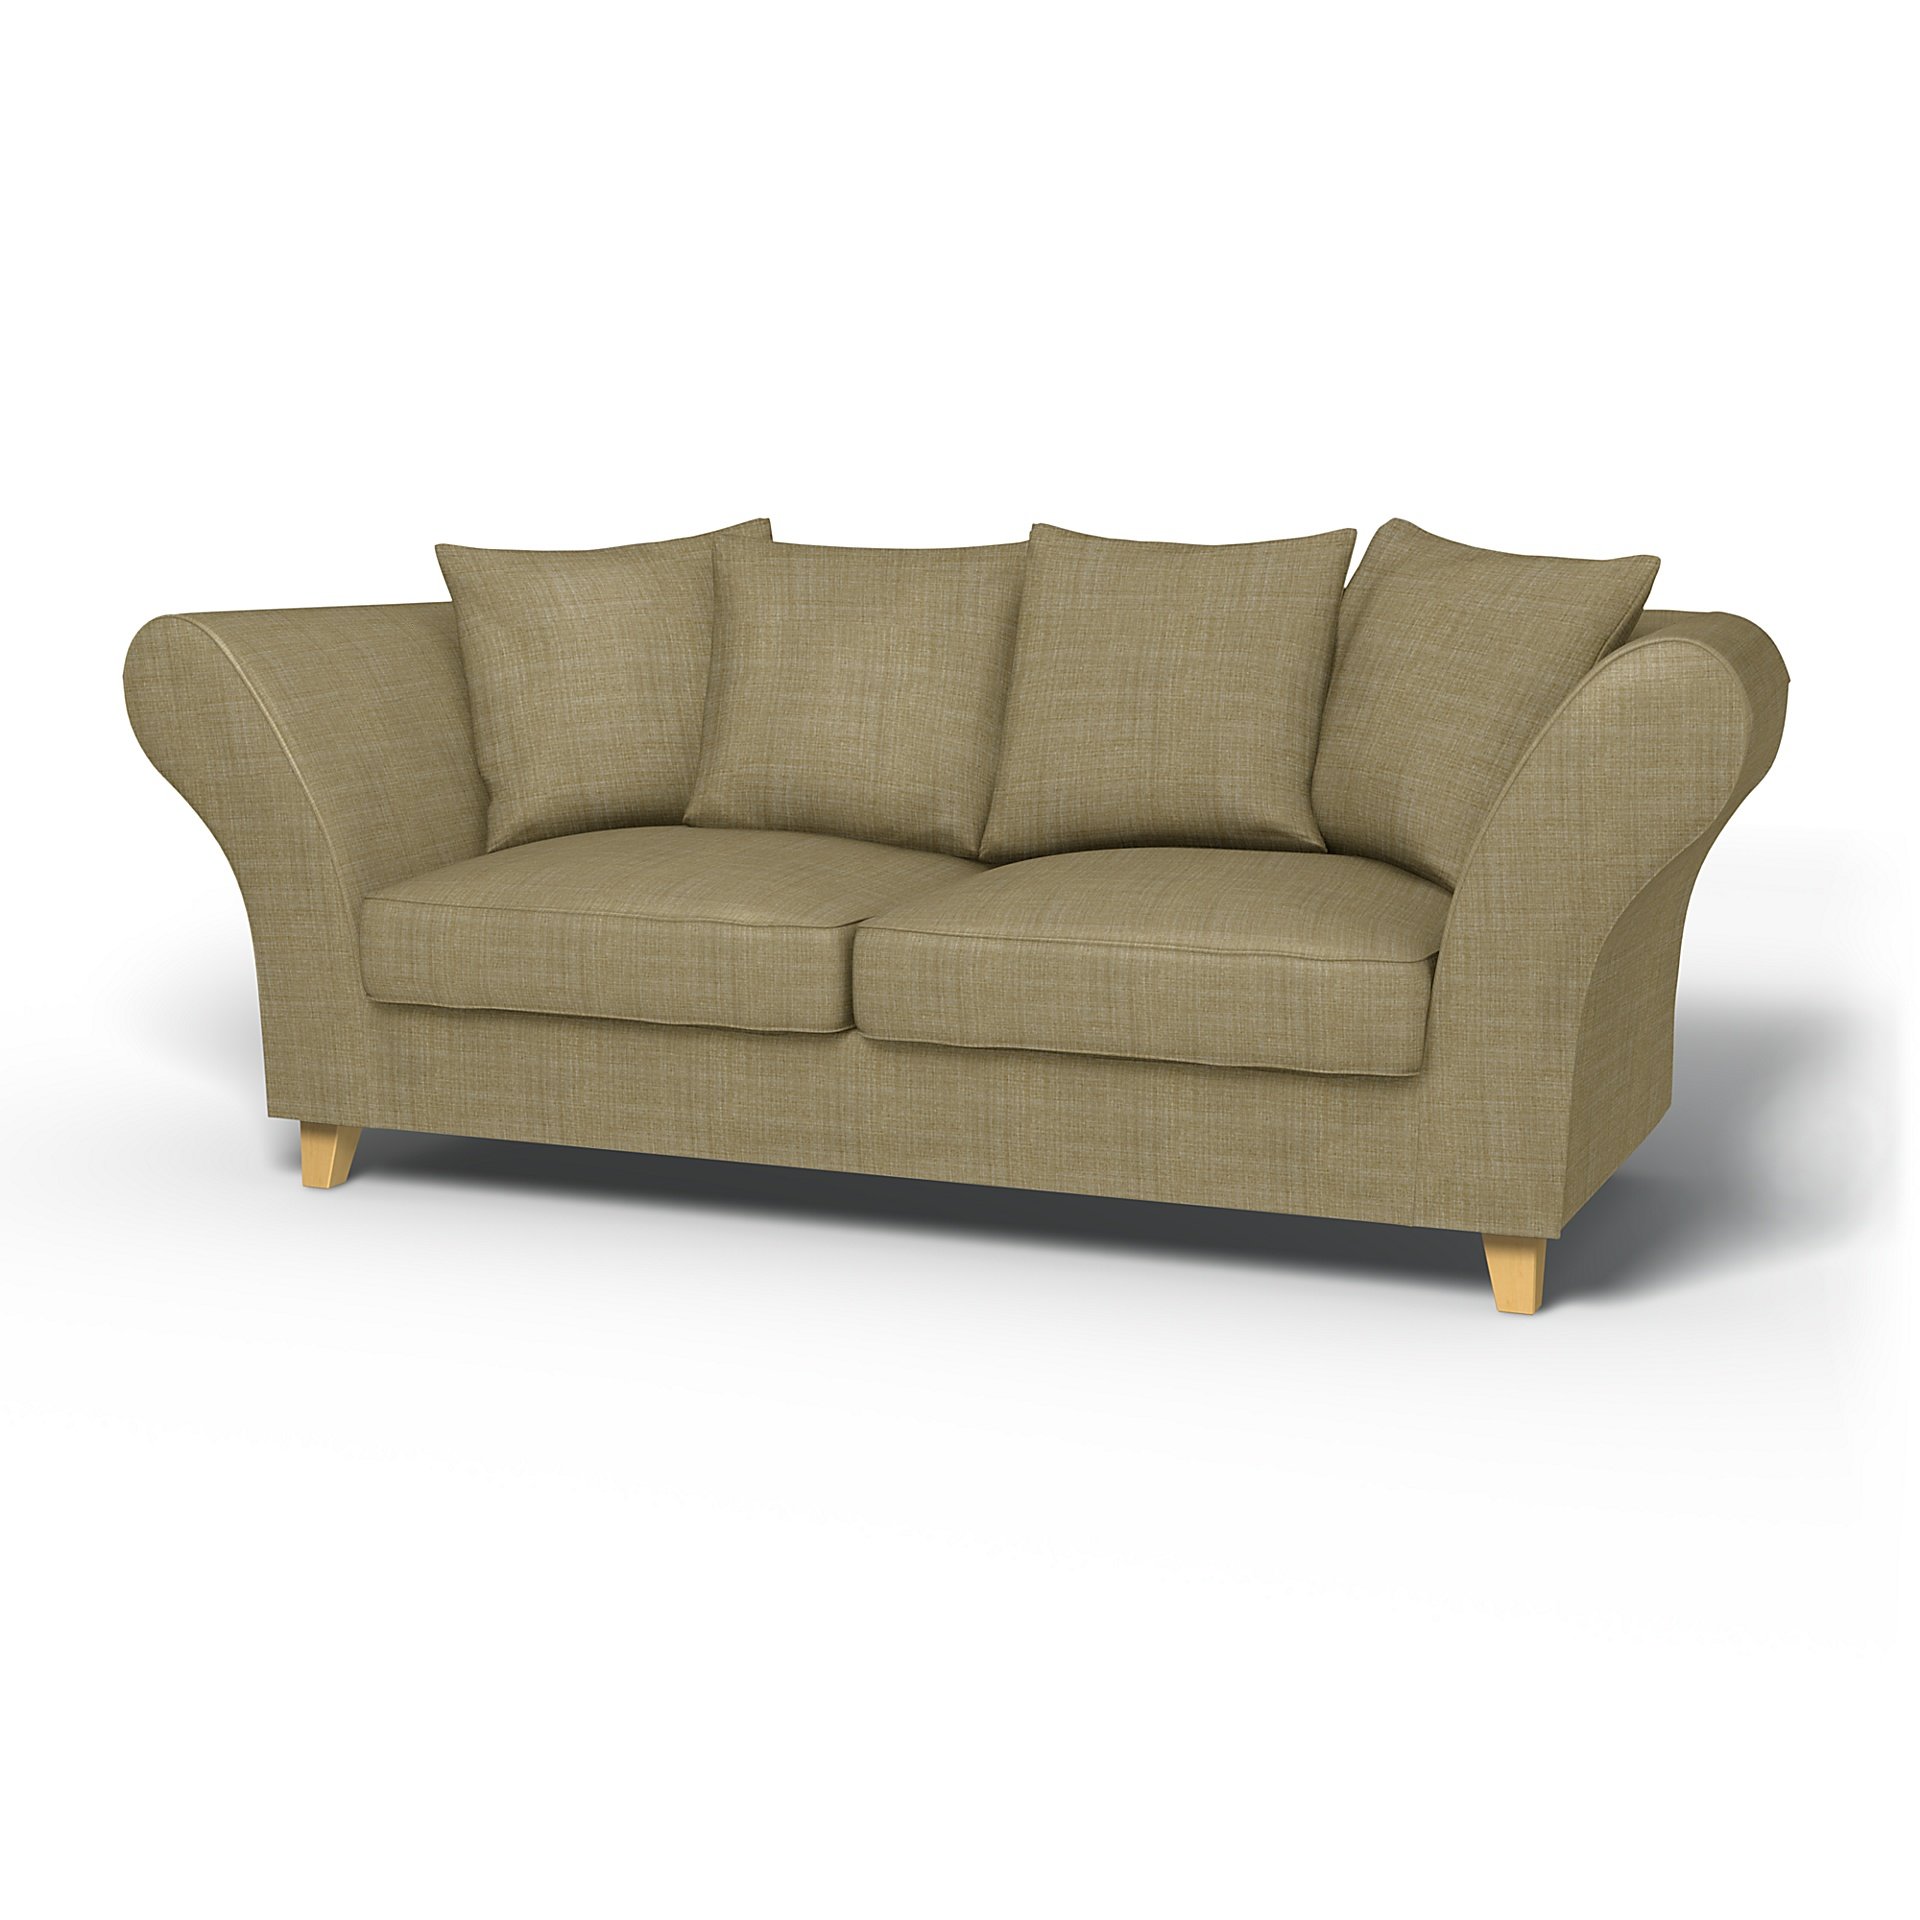 IKEA - Backa 2.5 Seater Sofa Cover, Dusty Yellow, Boucle & Texture - Bemz